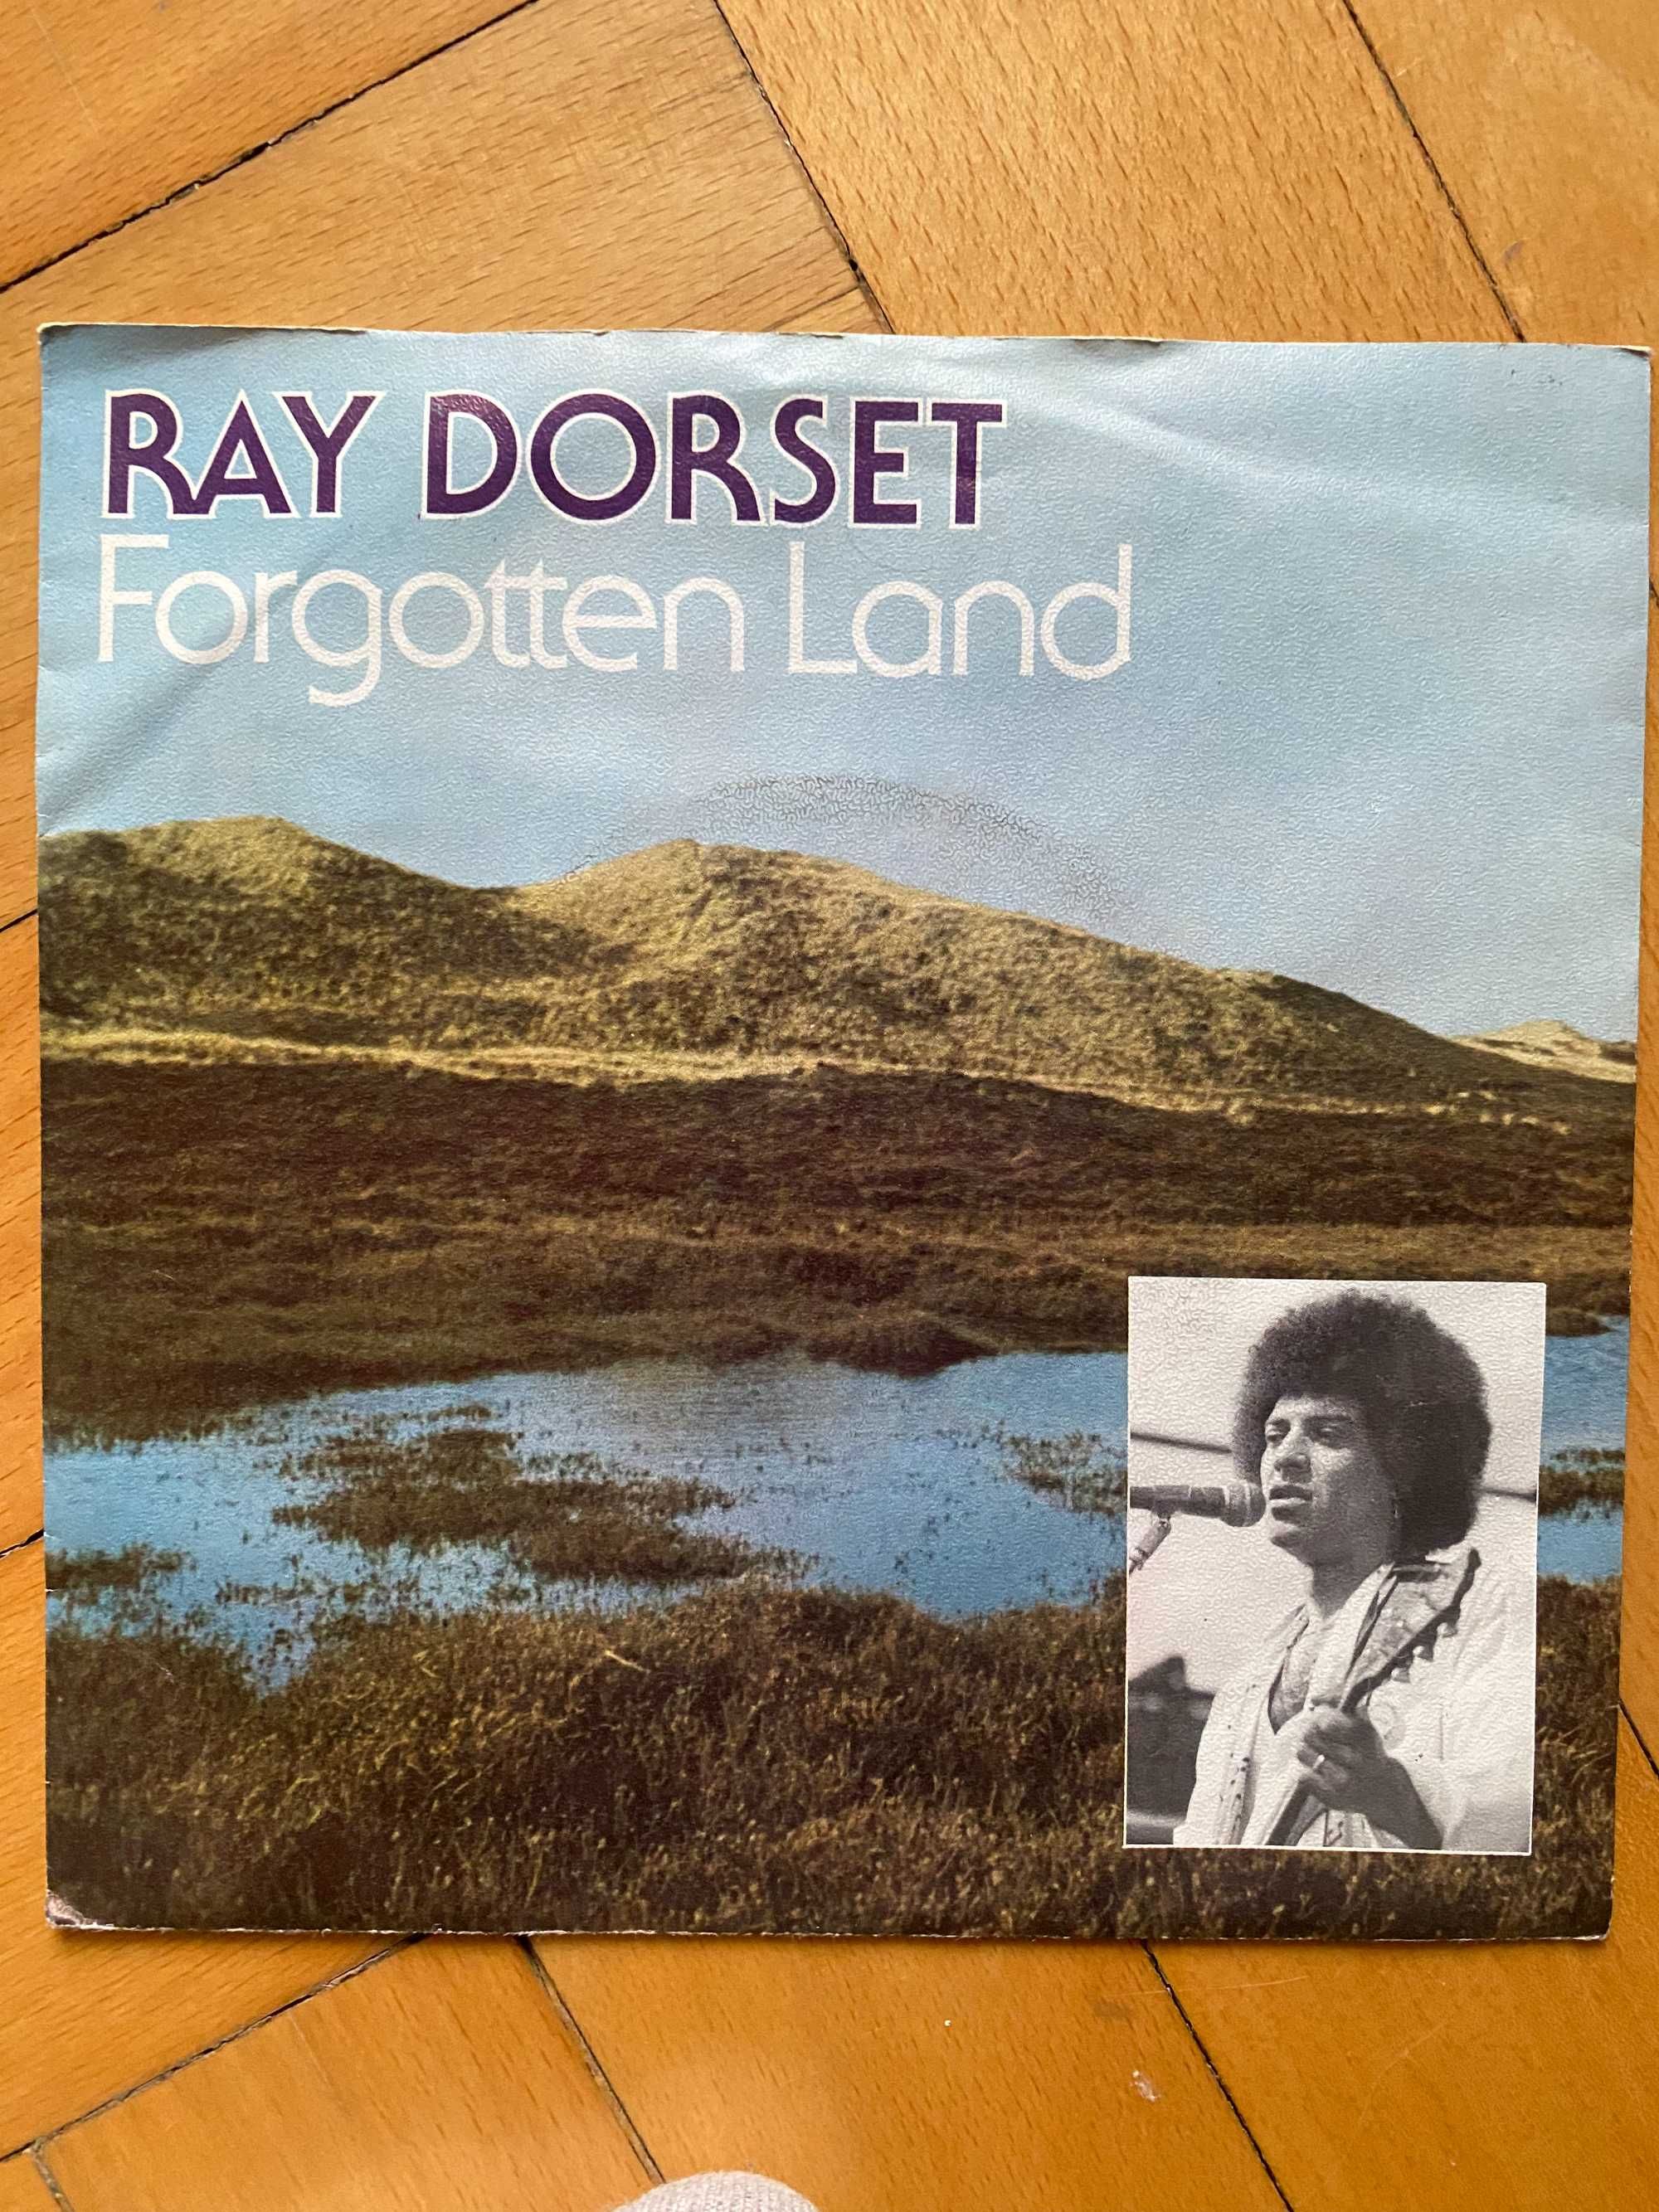 Ray Dorset - Winyl 7' - 1980